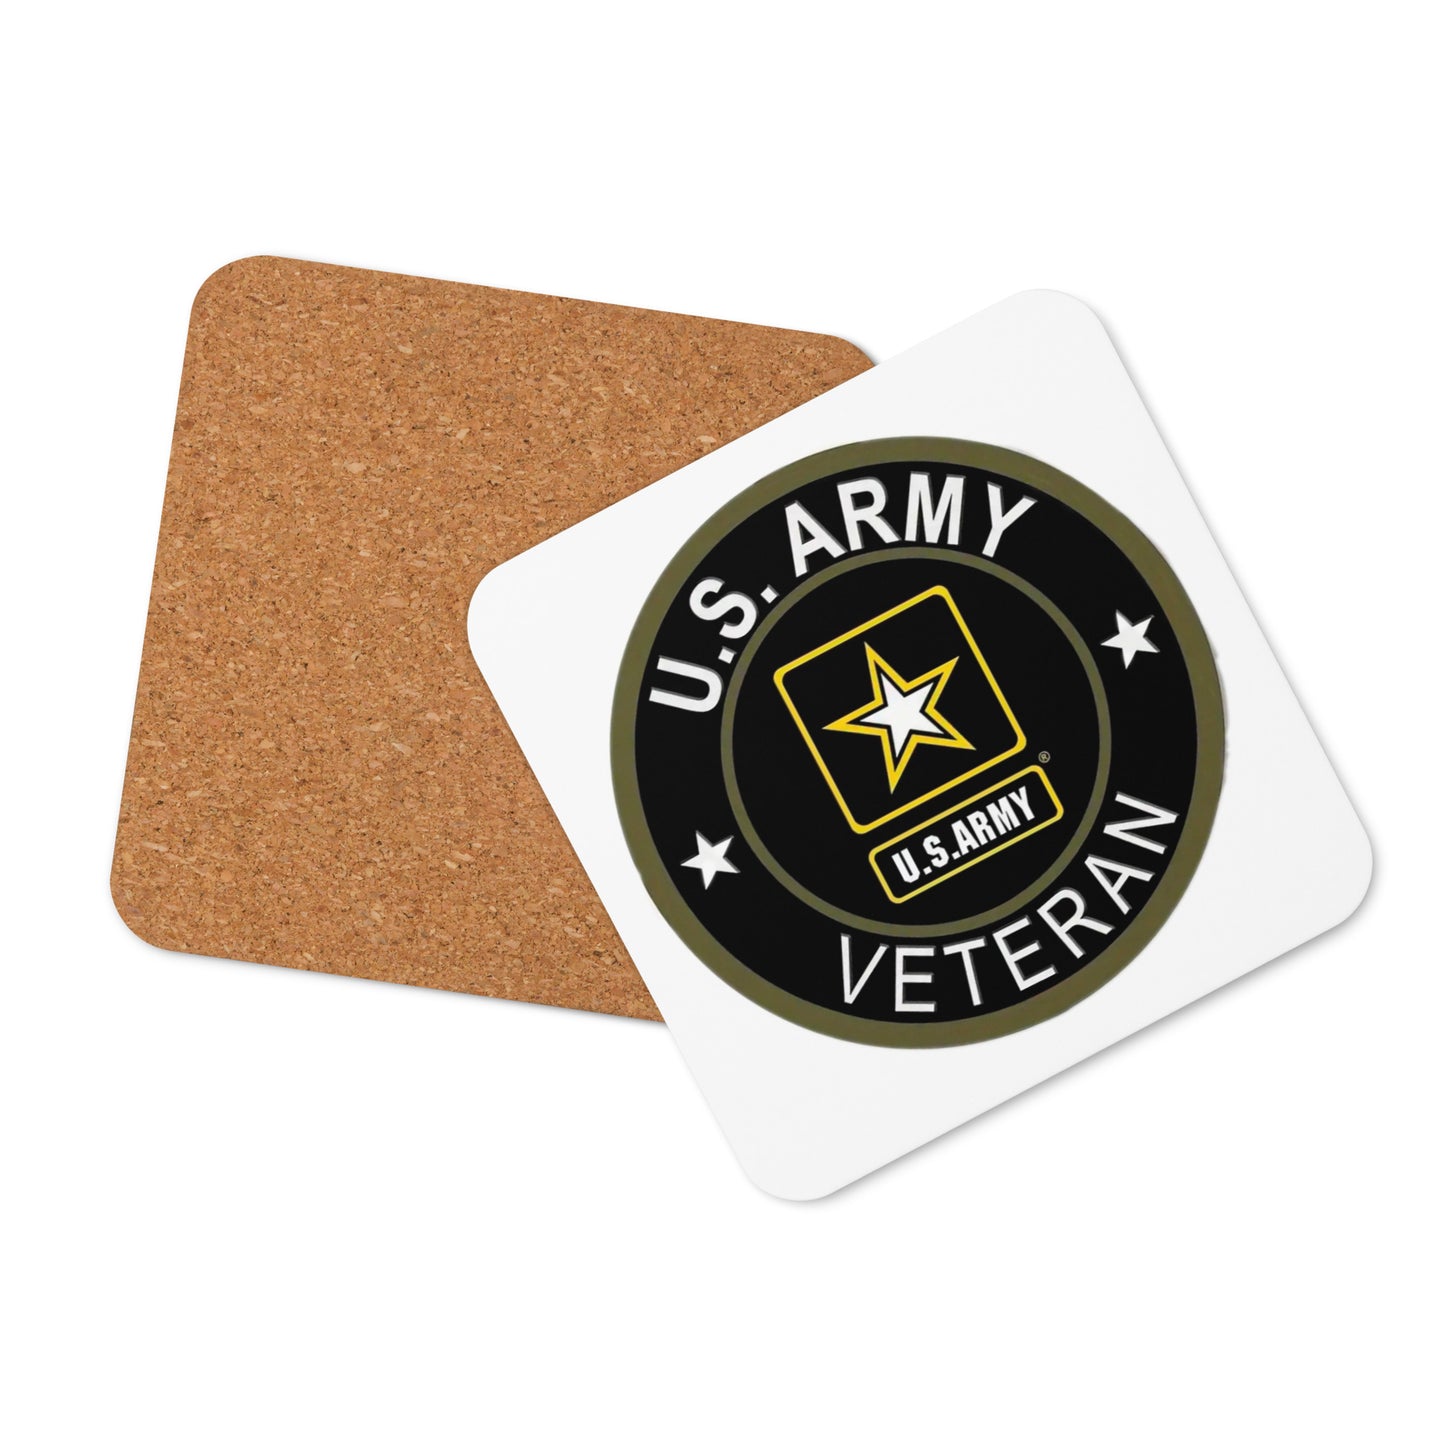 Cork-back coaster - U.S. Army Veteran